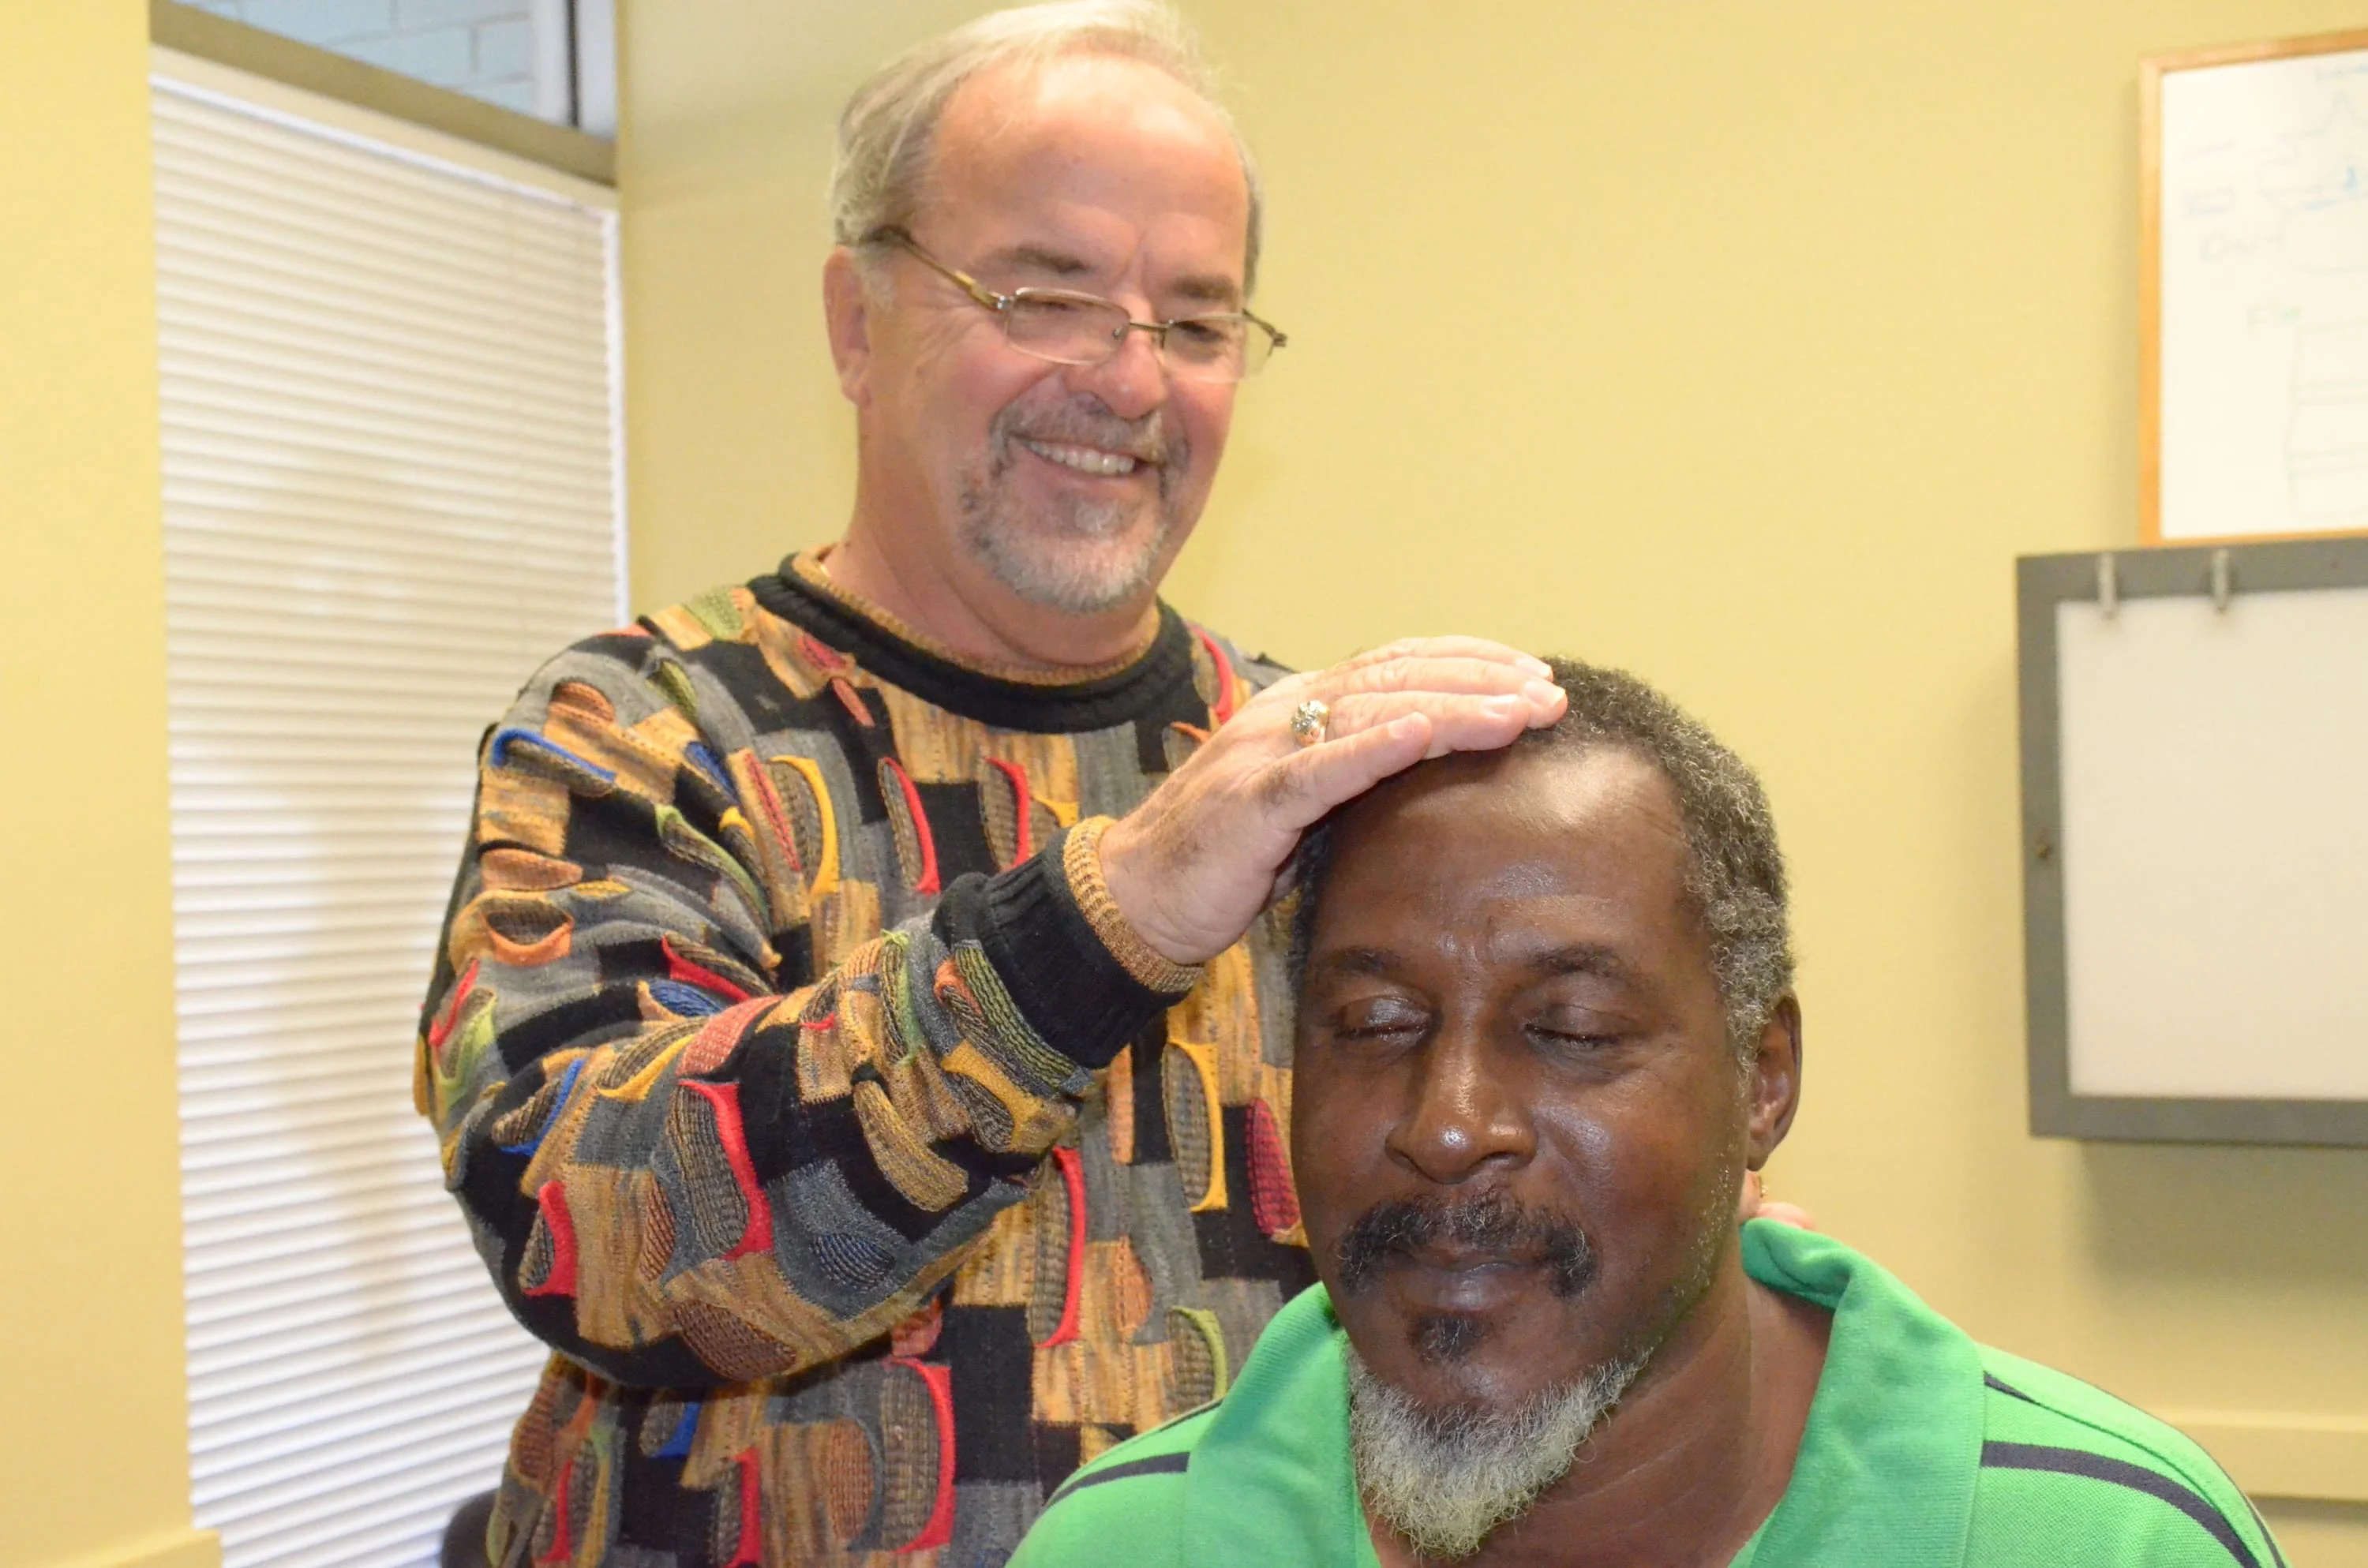 chiropractor adjusting male patient's neck 